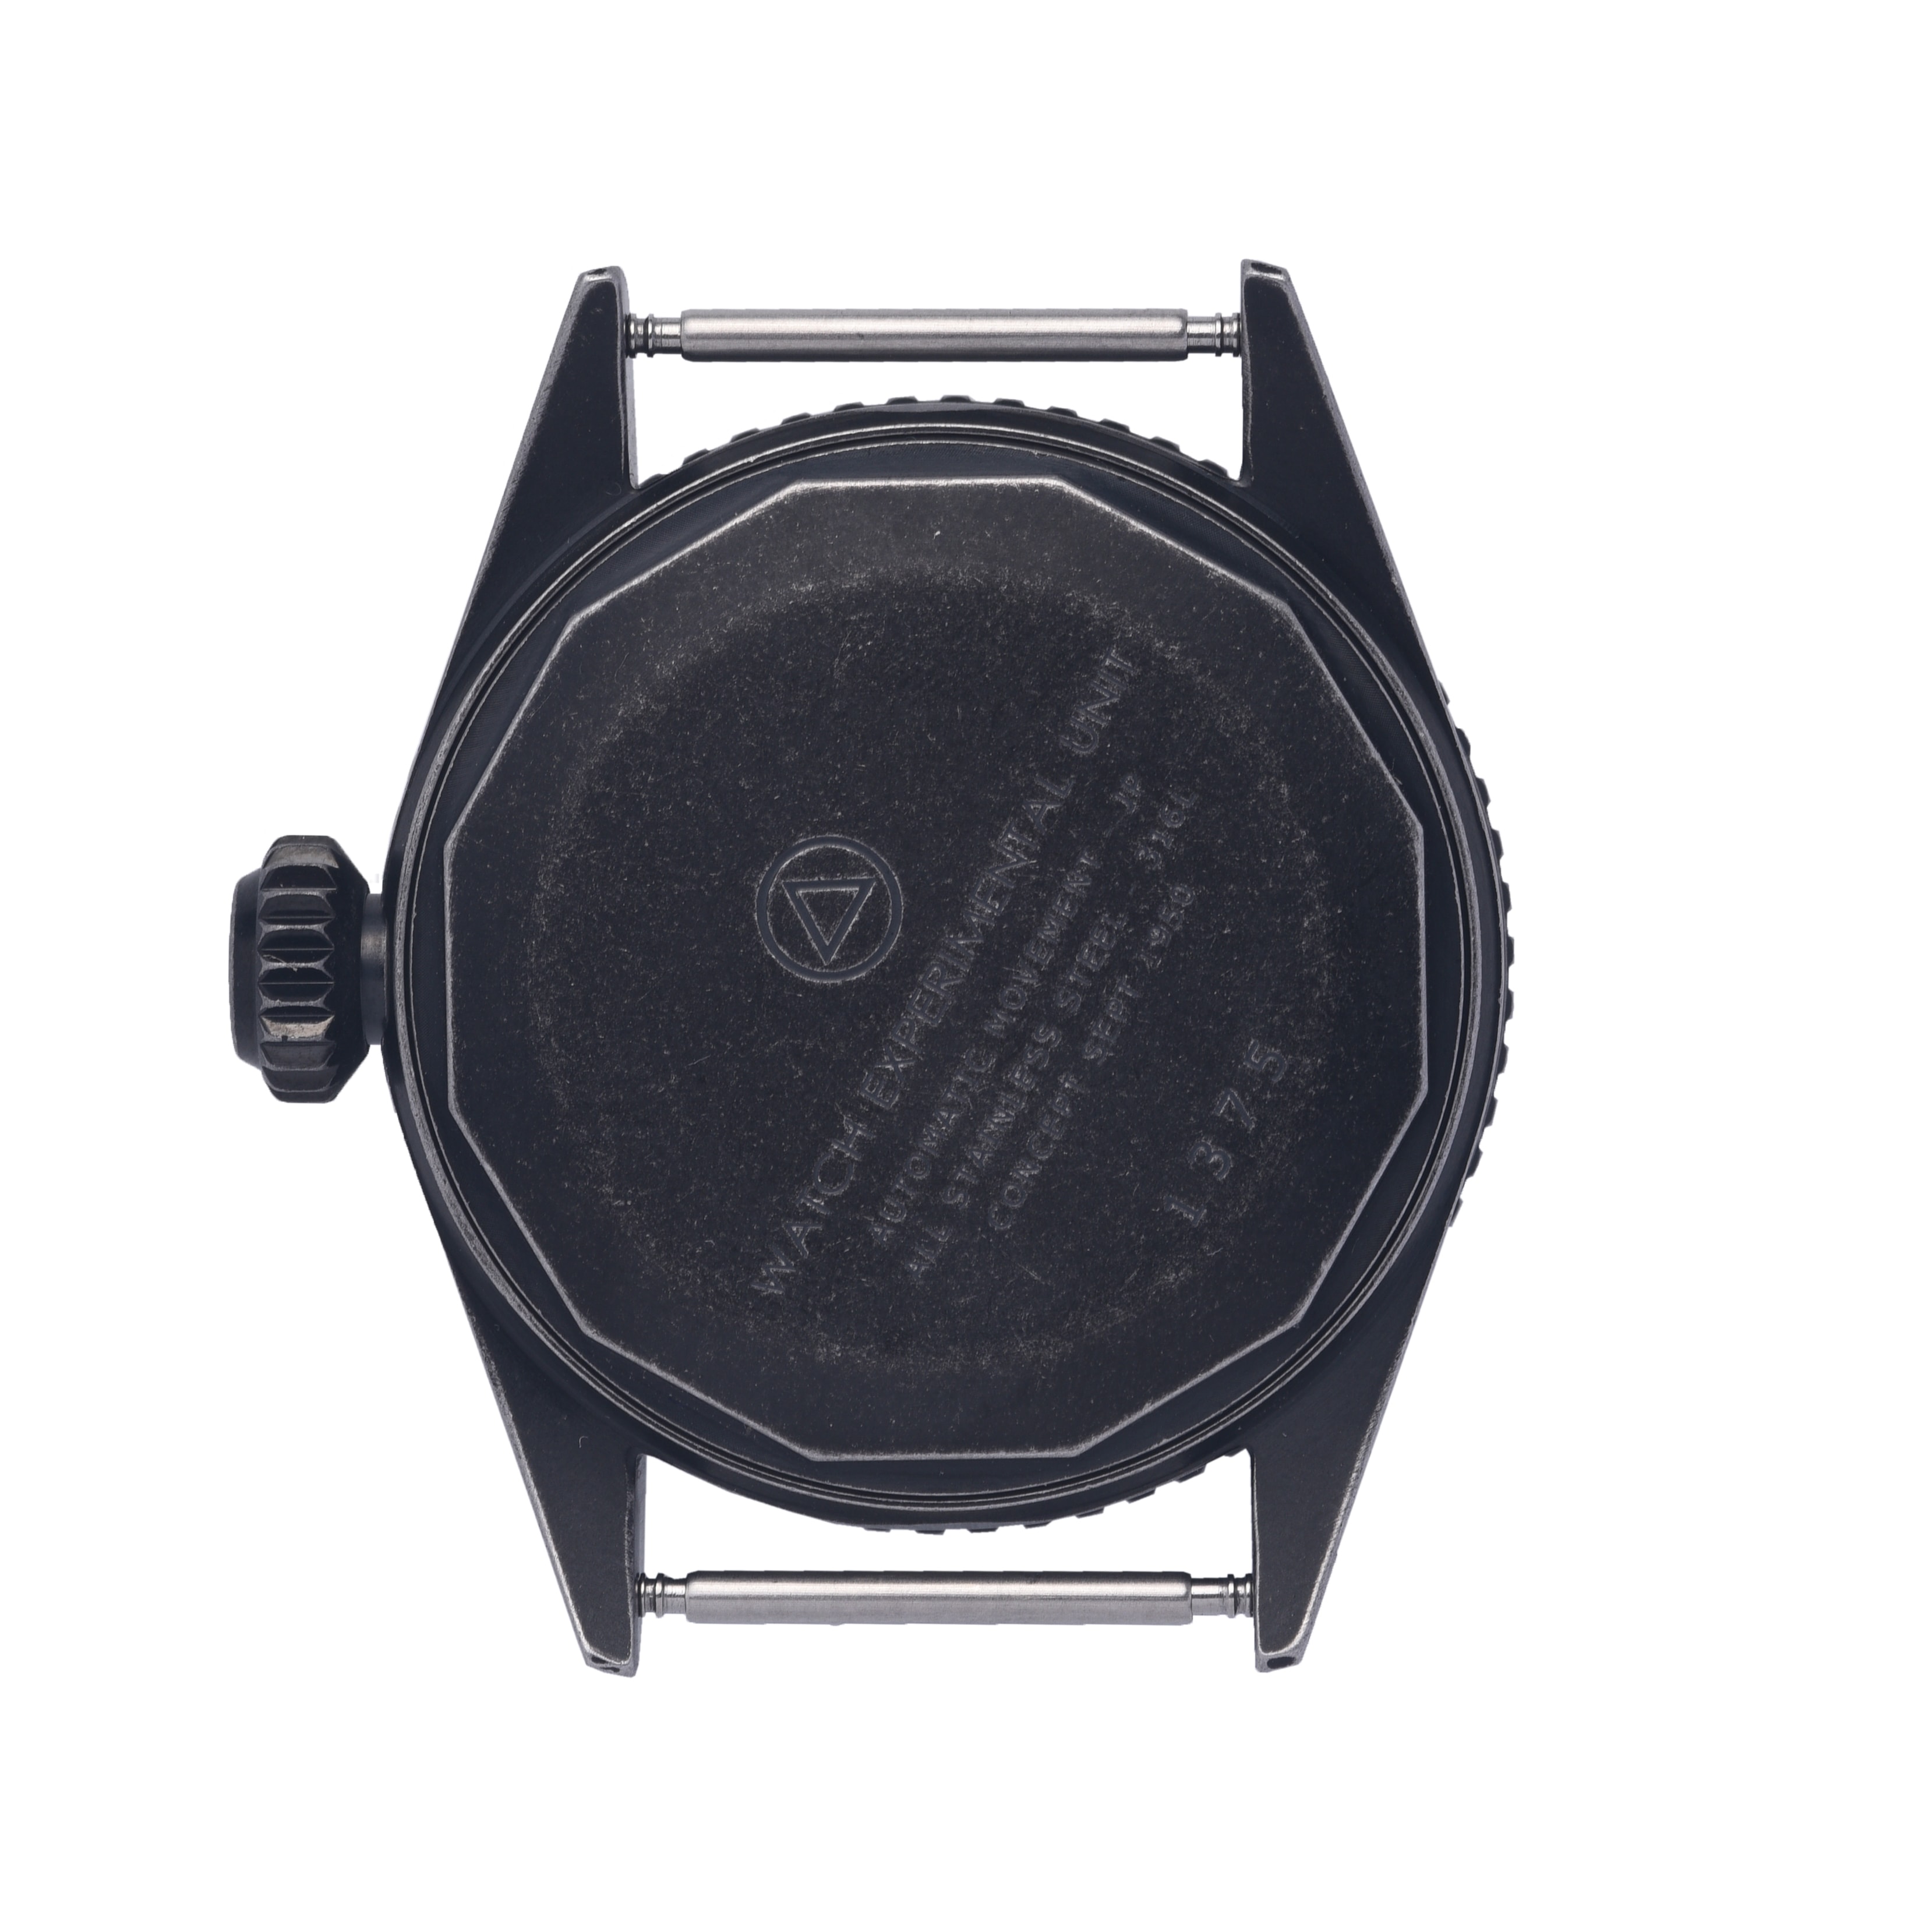 MADNESS x WMT Watches 聯乘腕錶釋出預購情報